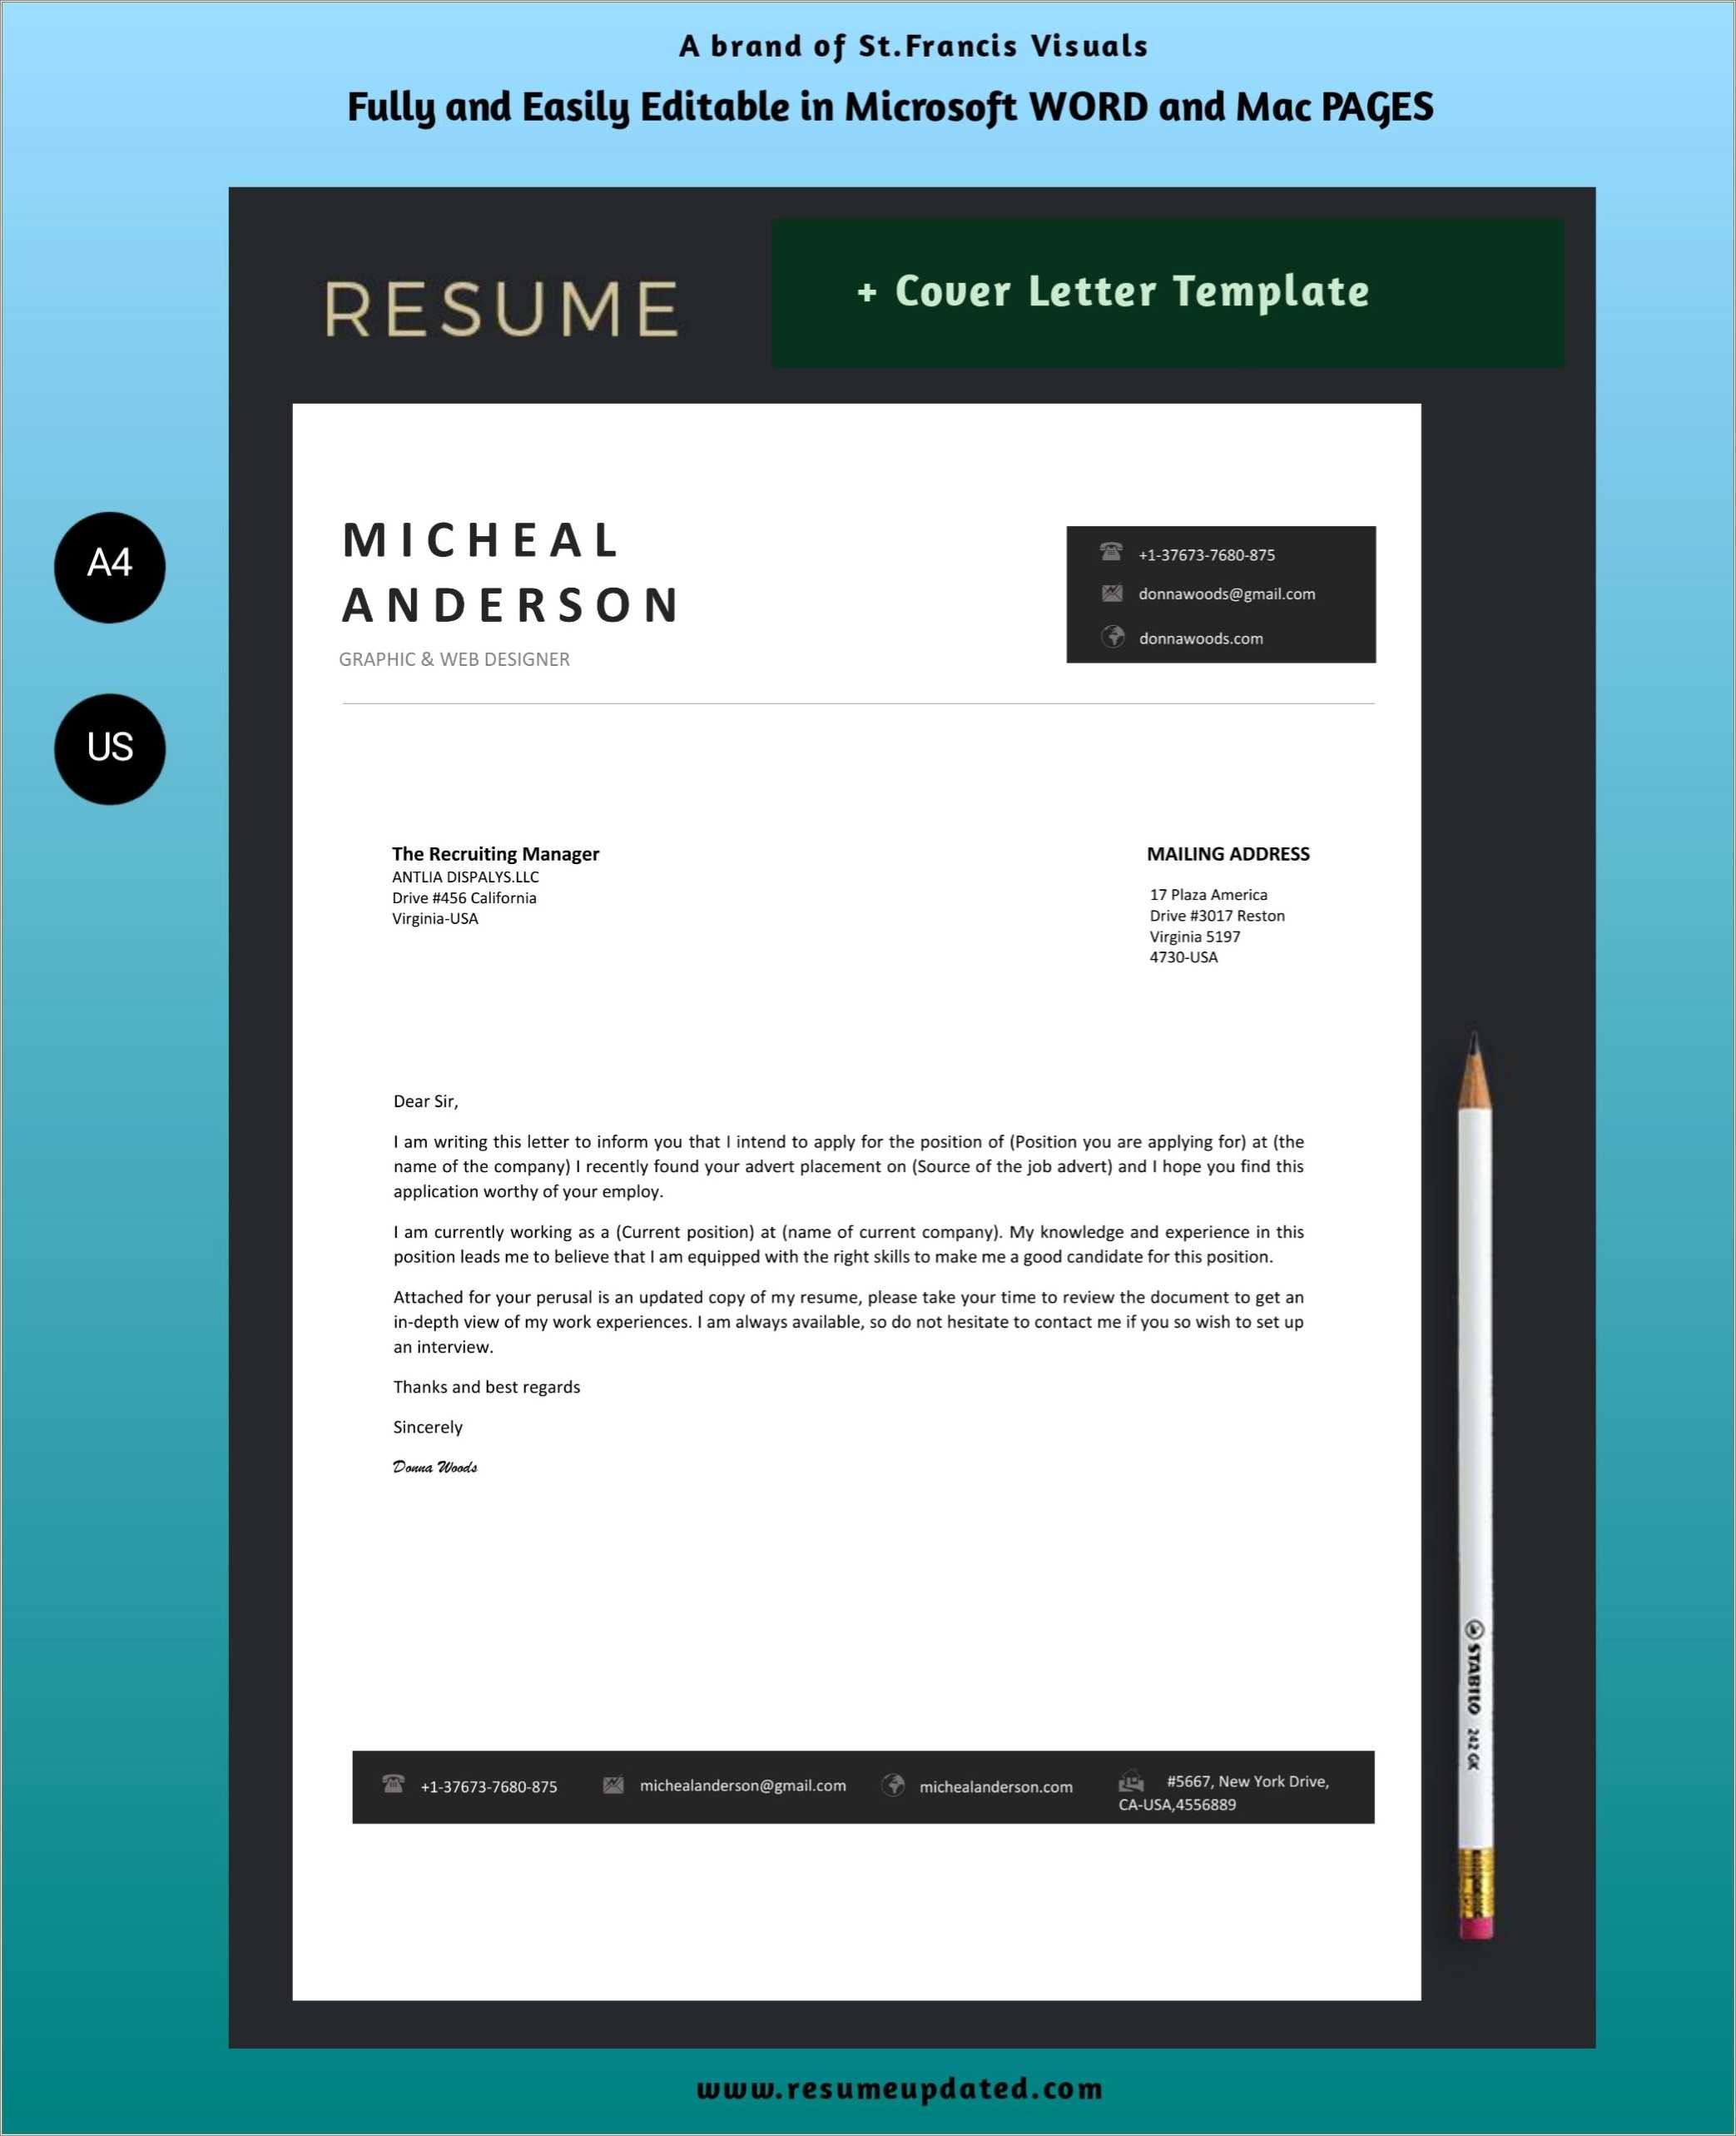 resume and cover letter workshops